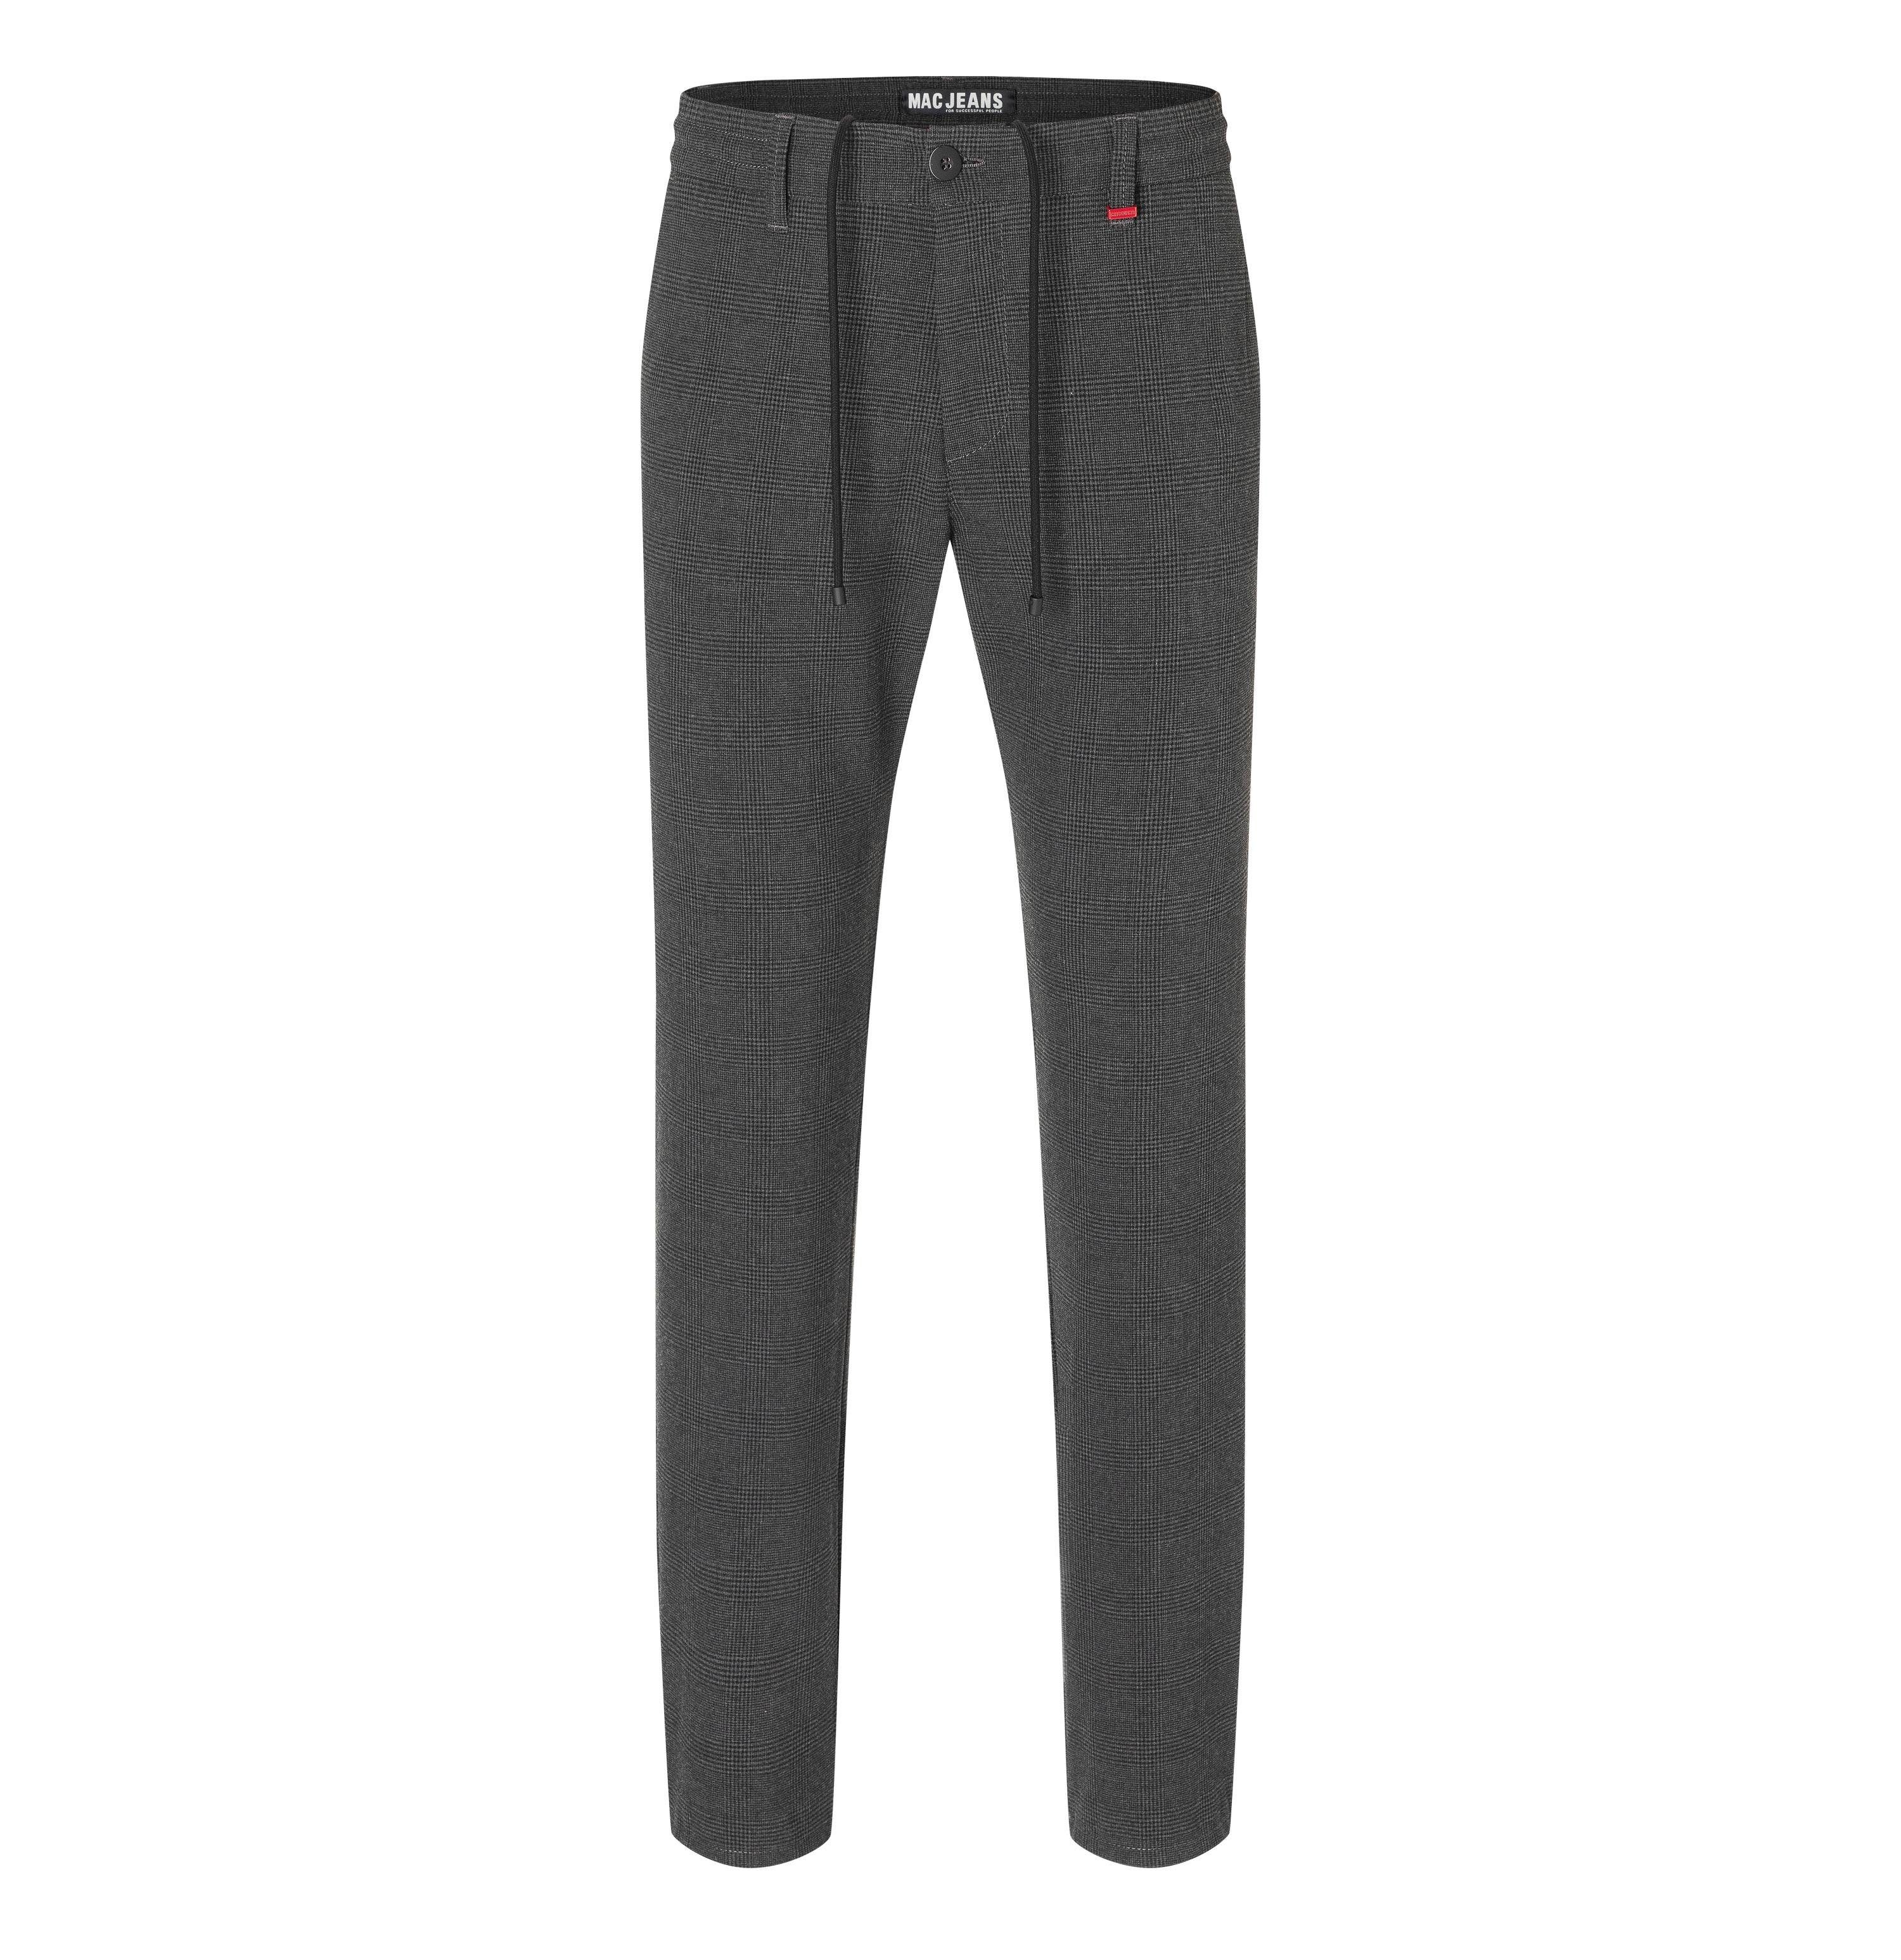 077K 5-Pocket-Jeans grey MAC 6333-00-0703L SPORT LENNOX stone MAC